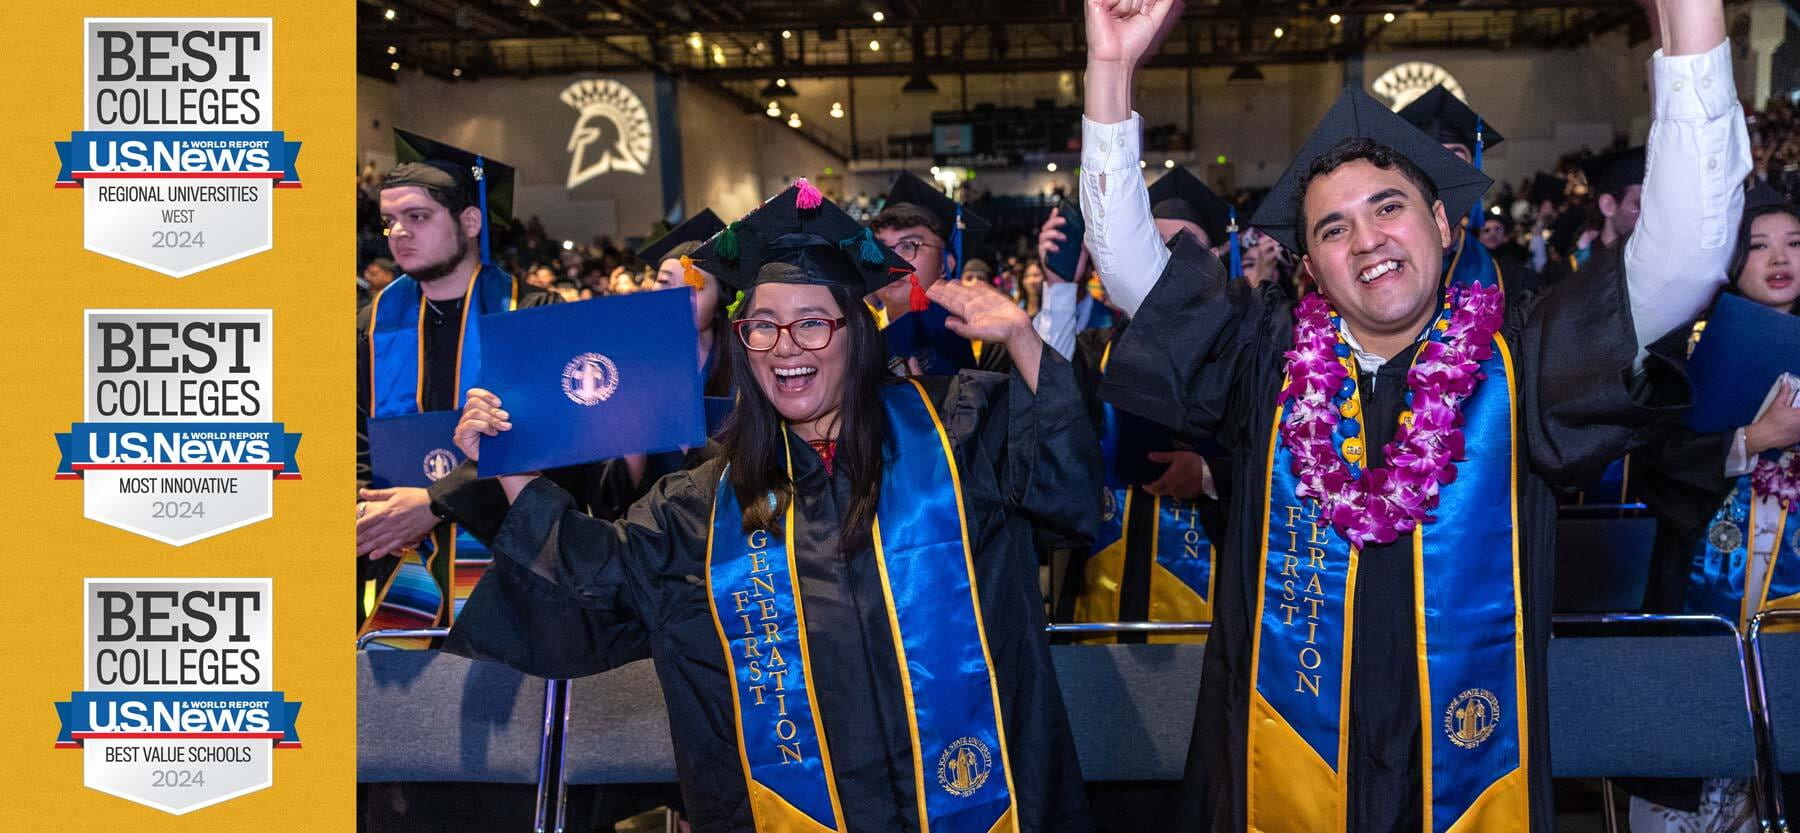 US News badges with two SJSU graduating students cheering